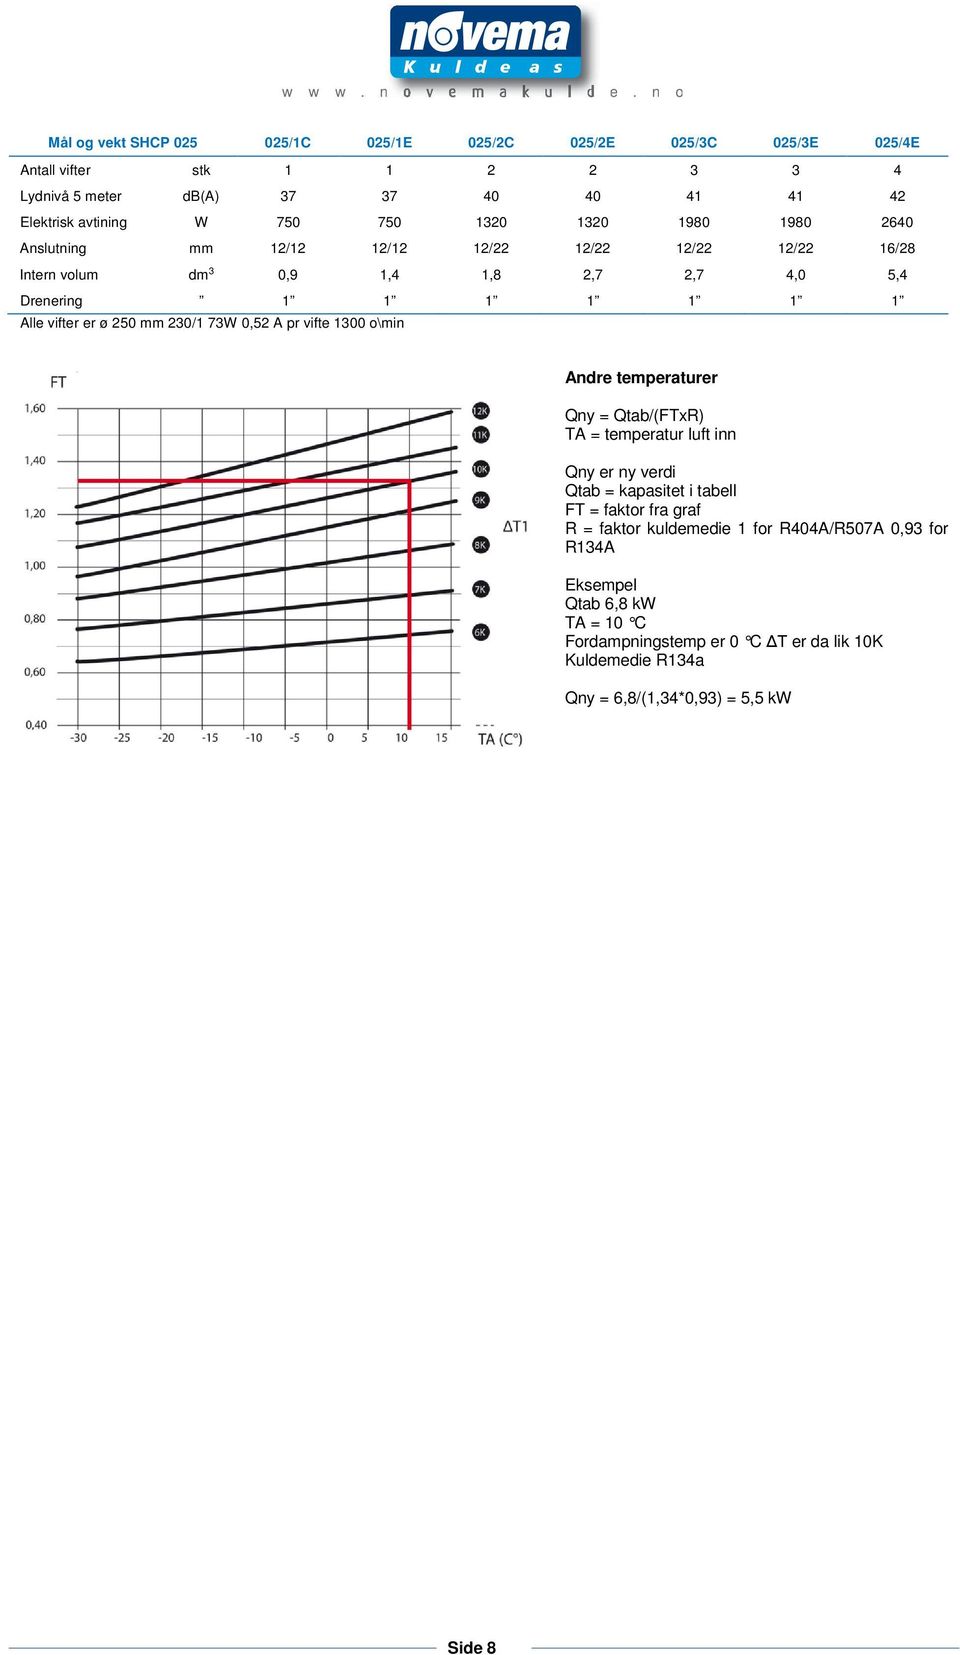 250 mm 230/1 73W 0,52 A pr vifte 1300 o\min Andre temperaturer Qny = Qtab/(FTxR) TA = temperatur luft inn Qny er ny verdi Qtab = kapasitet i tabell FT = faktor fra graf R =